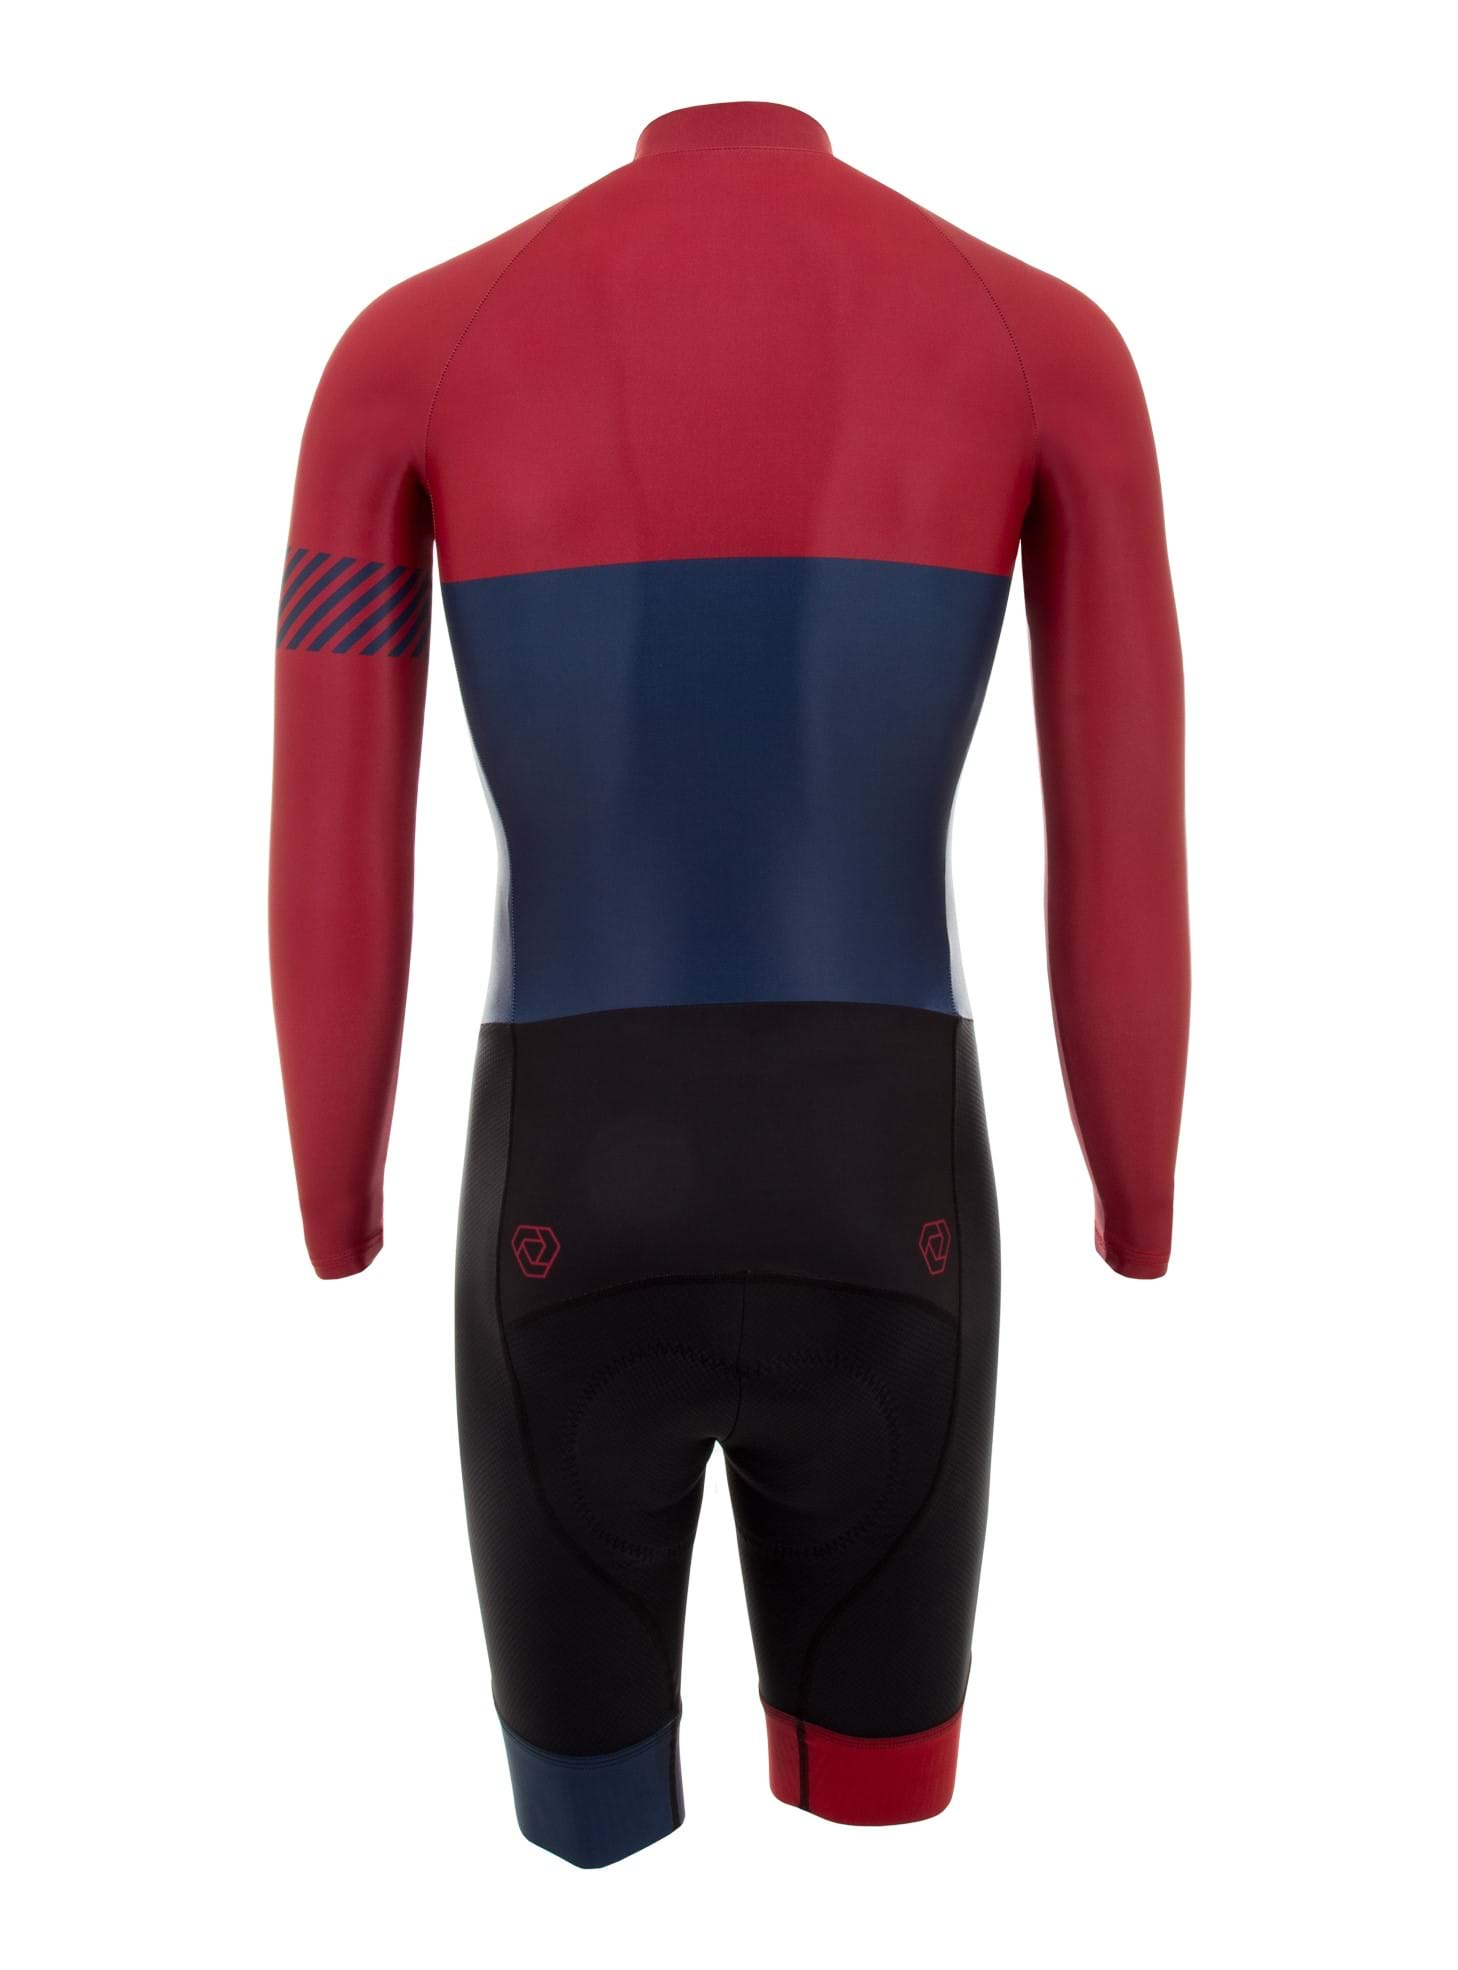 Verge Sport Classic Speedsuit Long Sleeve Cycling Race Skinsuit